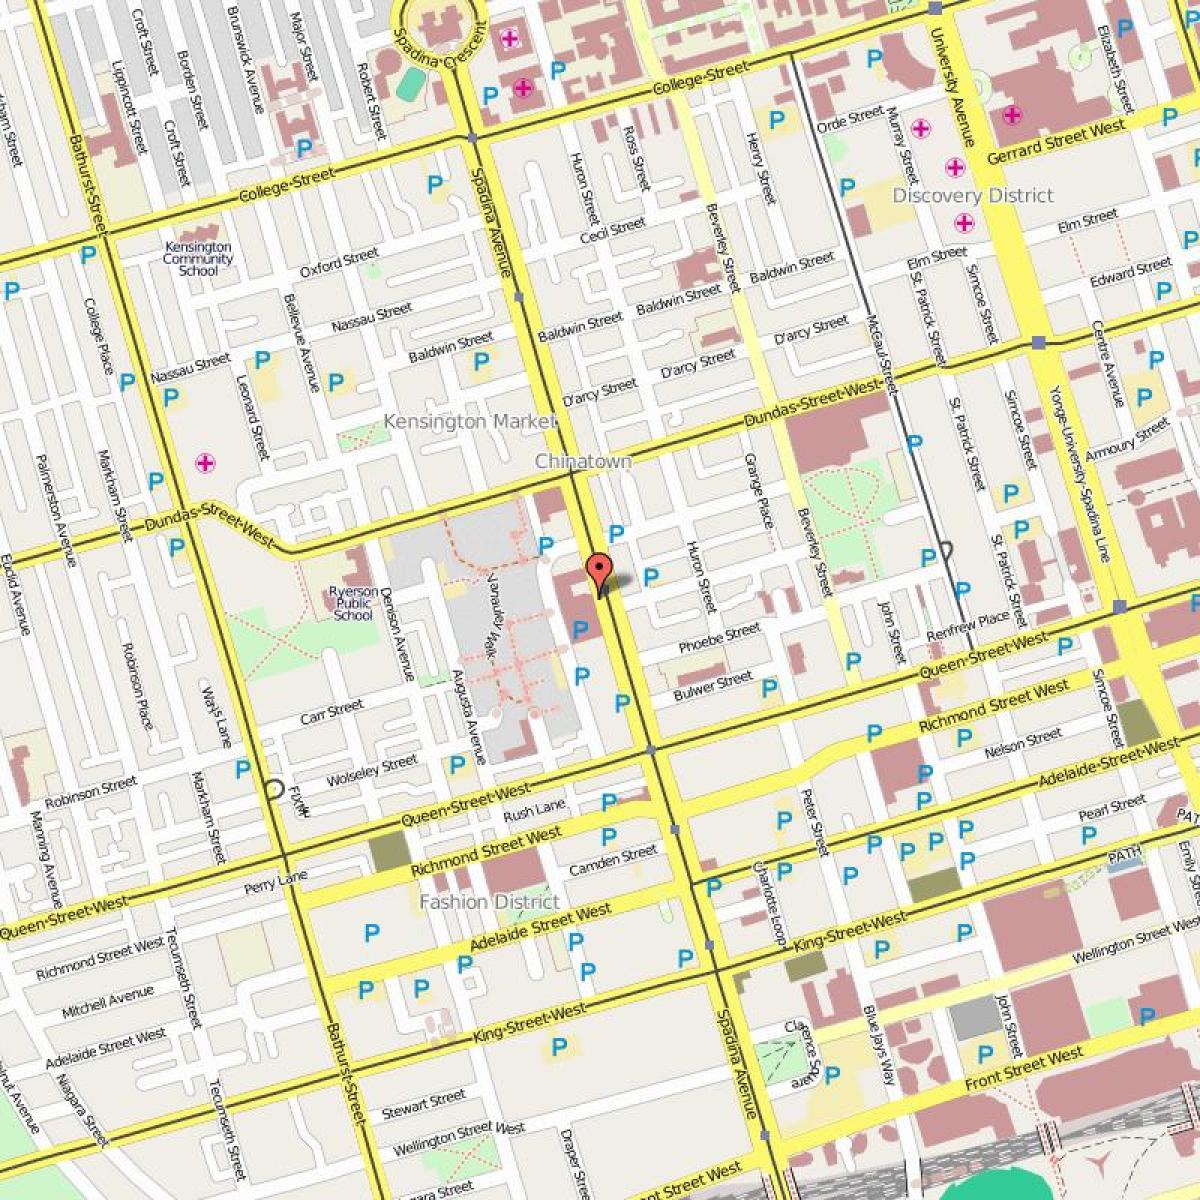 Karta över Chinatown i Toronto